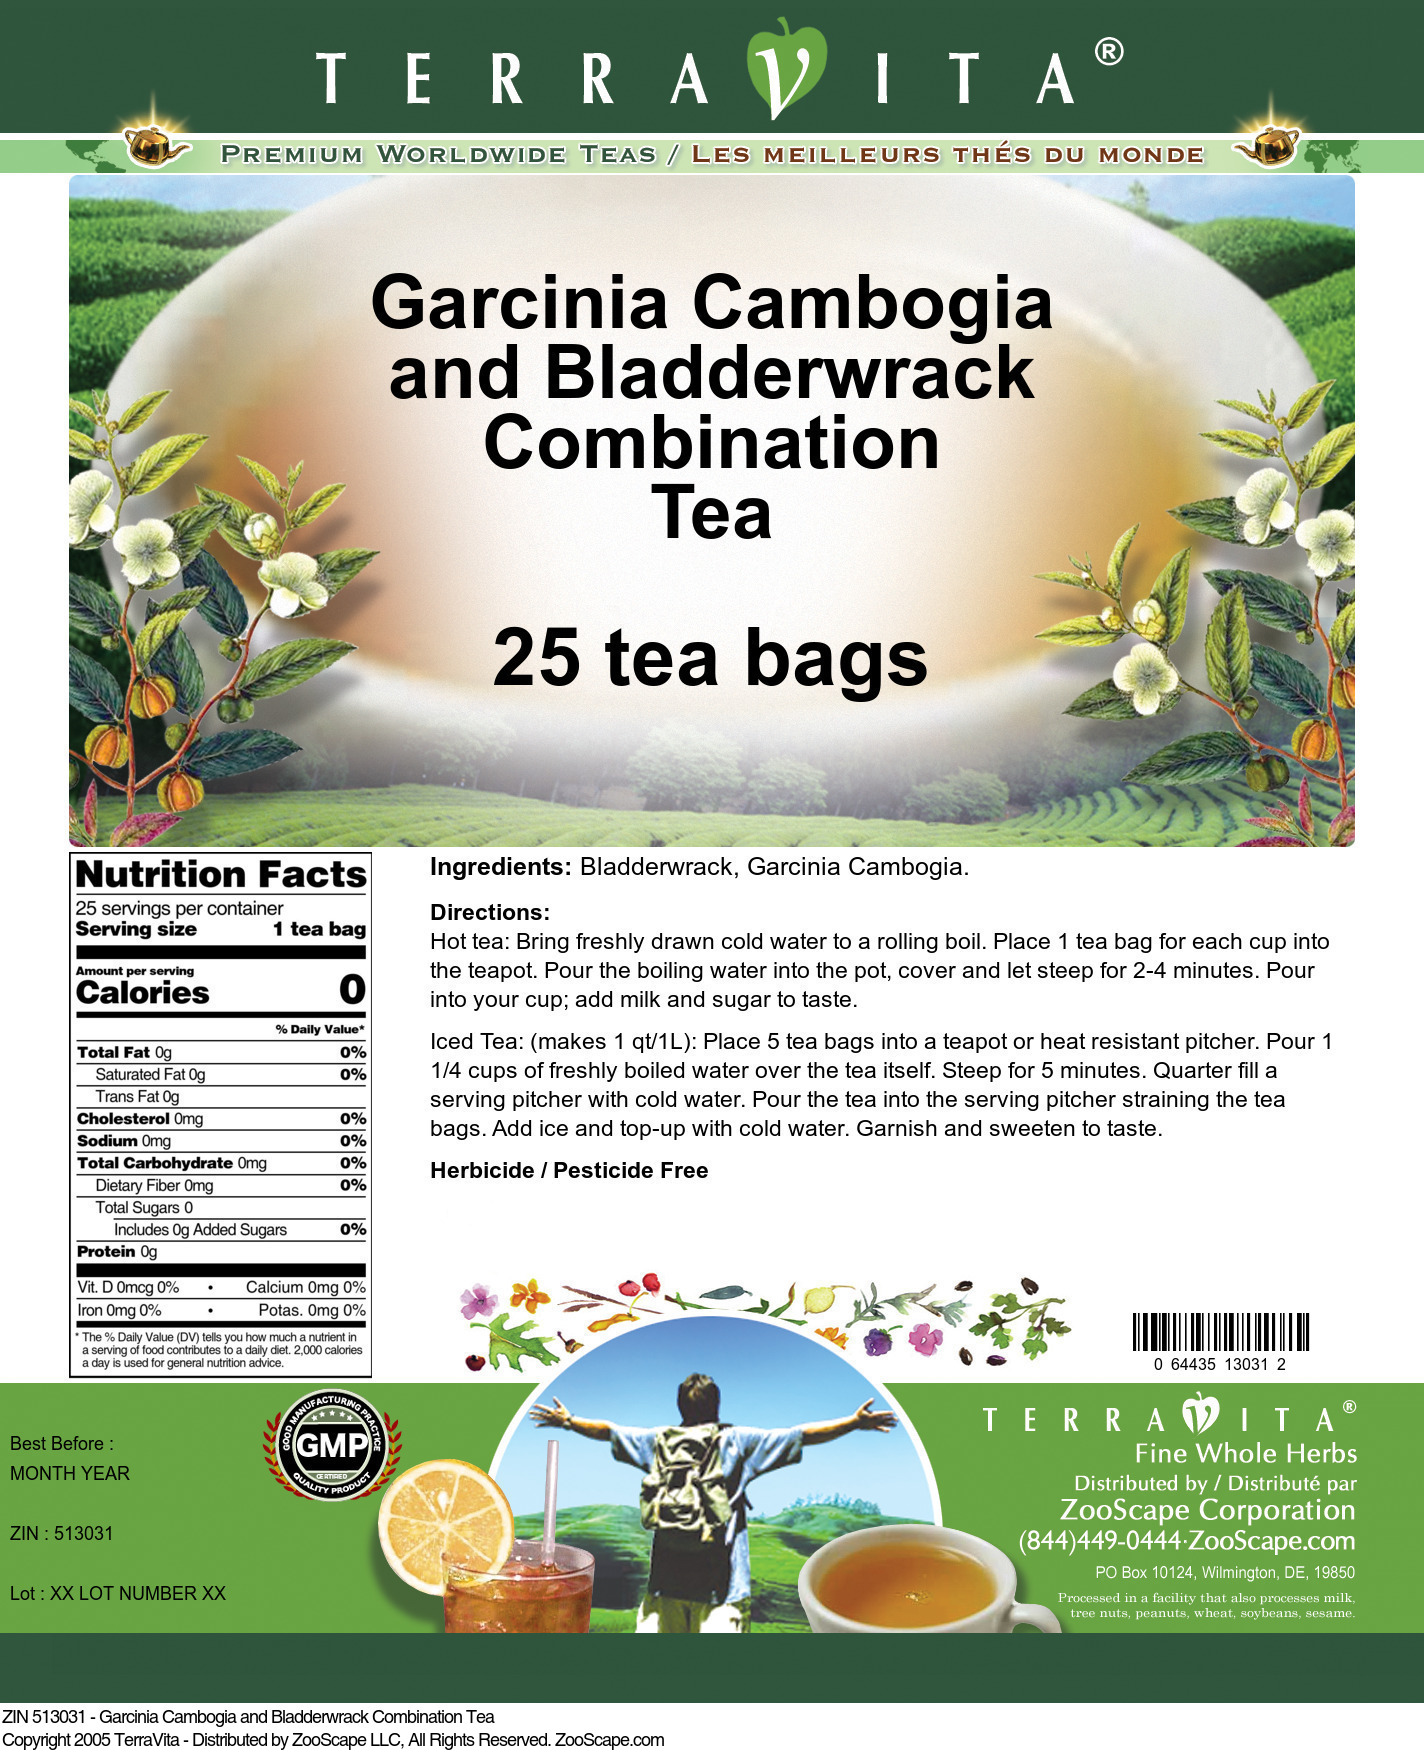 Garcinia Cambogia and Bladderwrack Combination Tea - Label